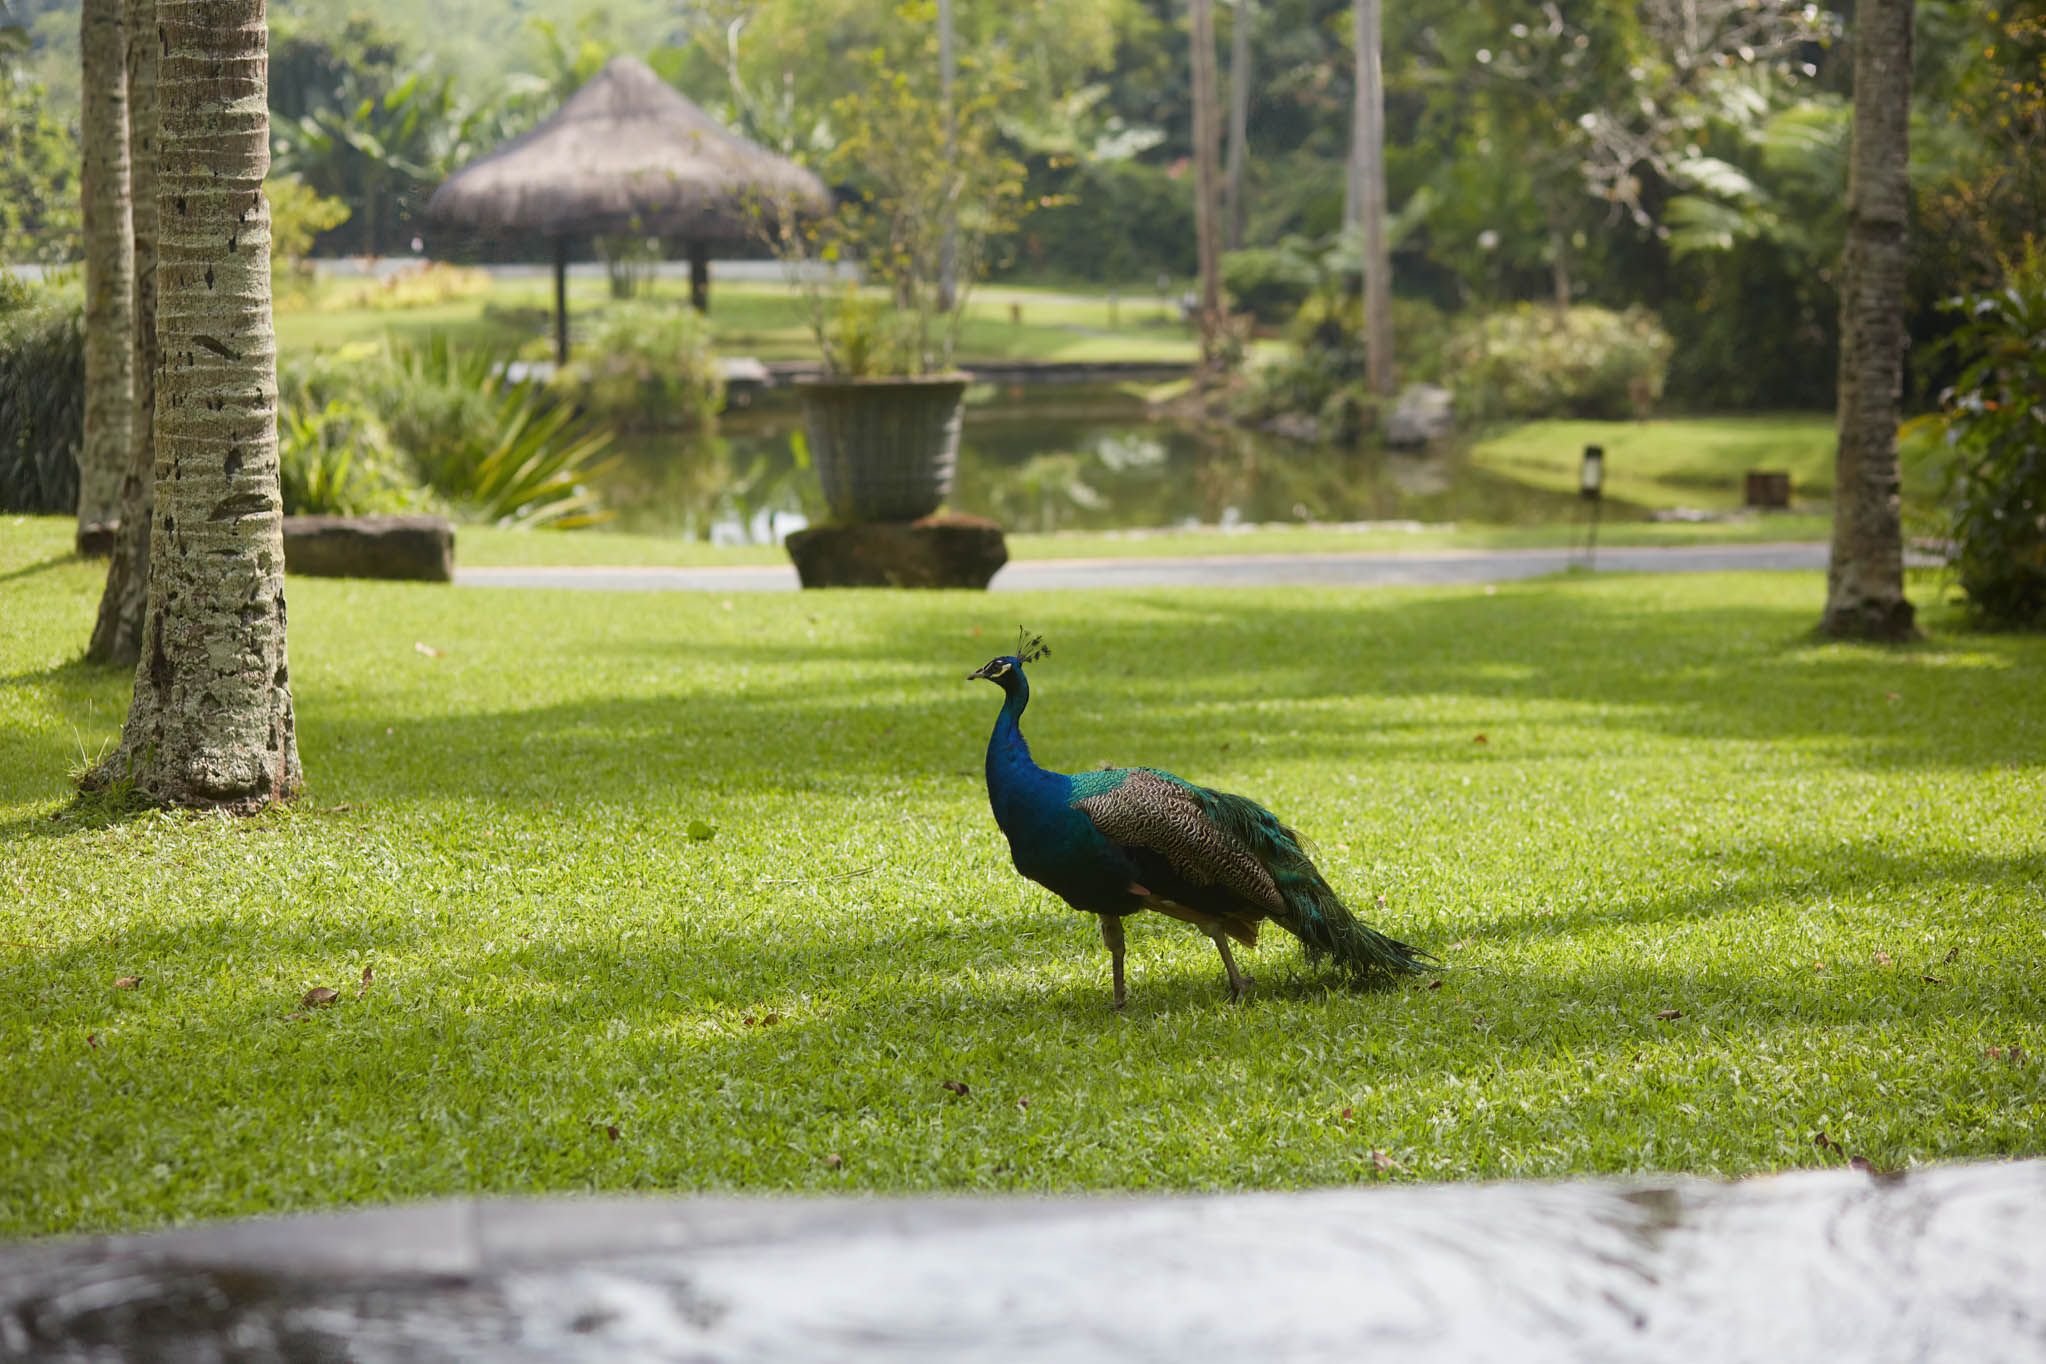 A resident peacock roaming the Farm